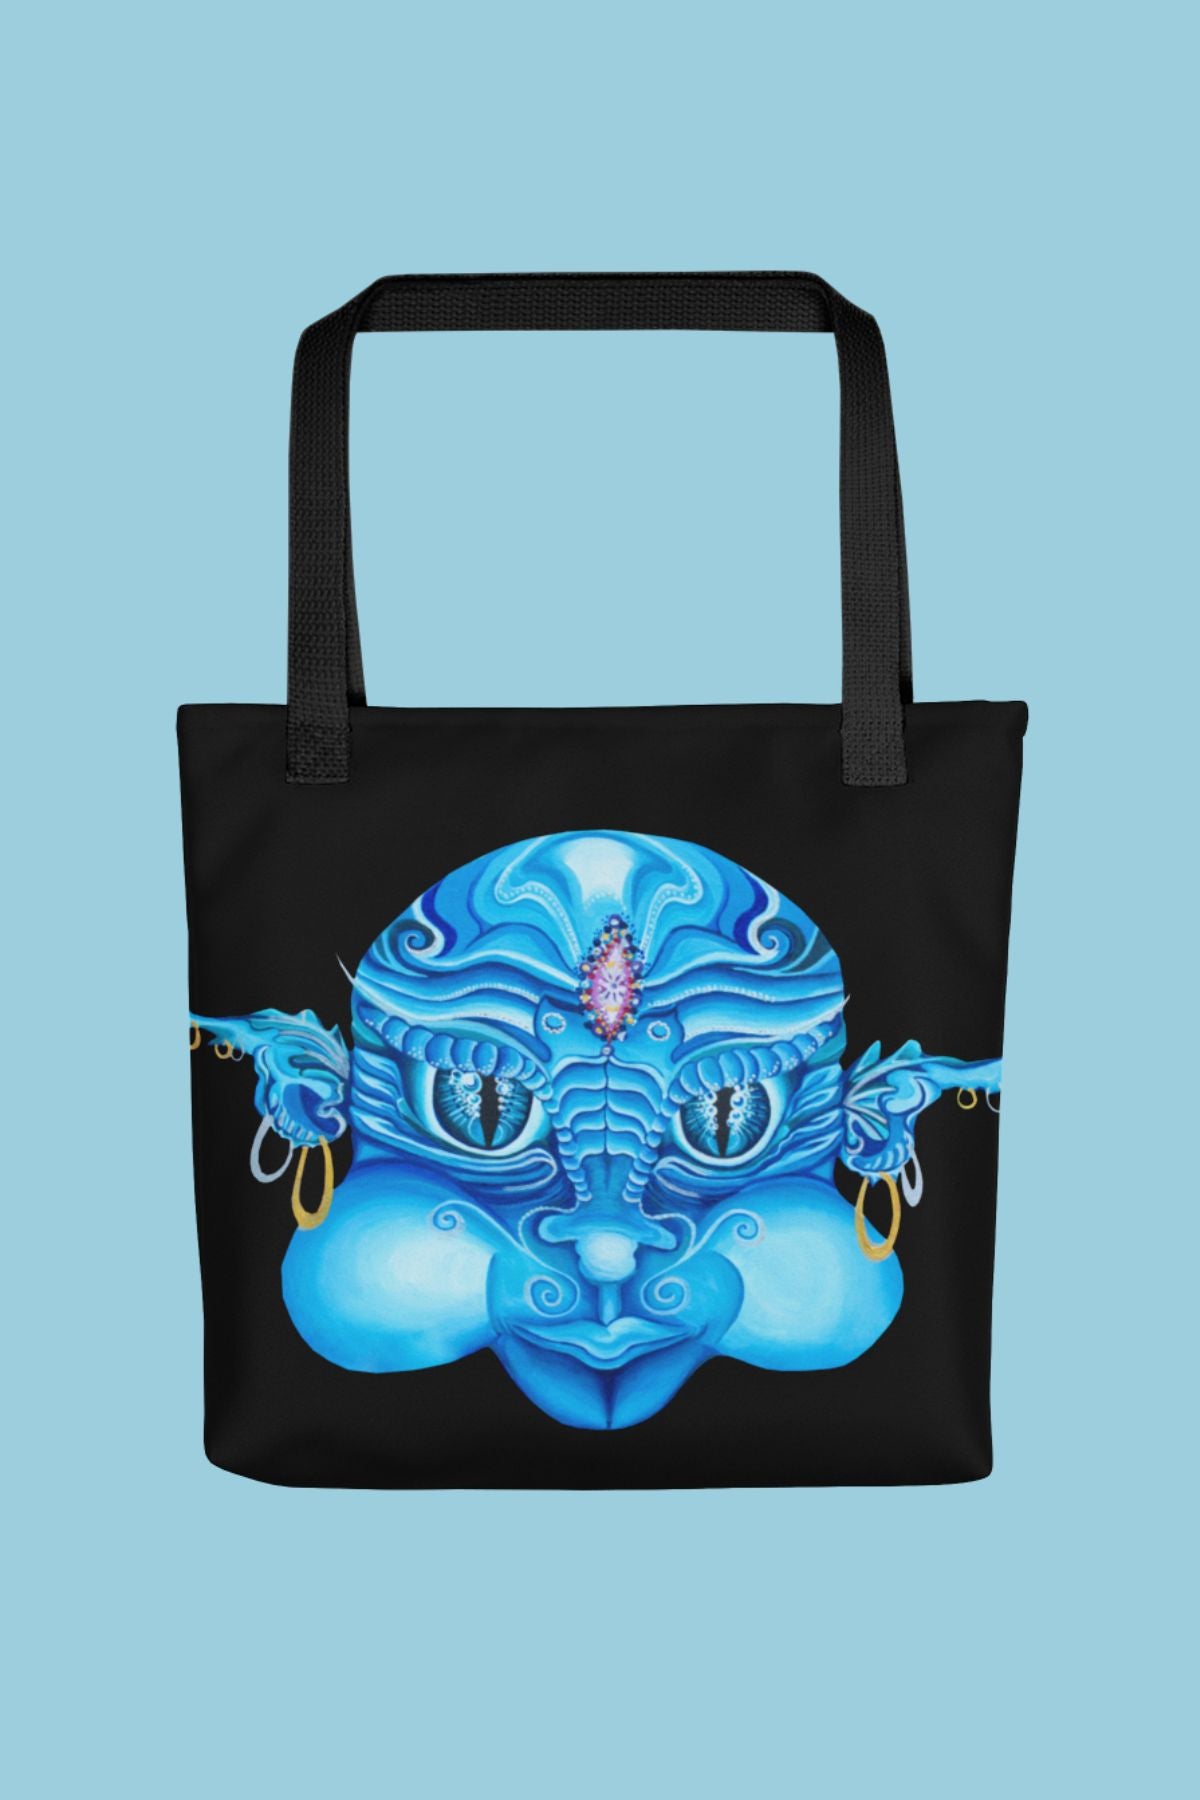 Magical Genie Tote Bag